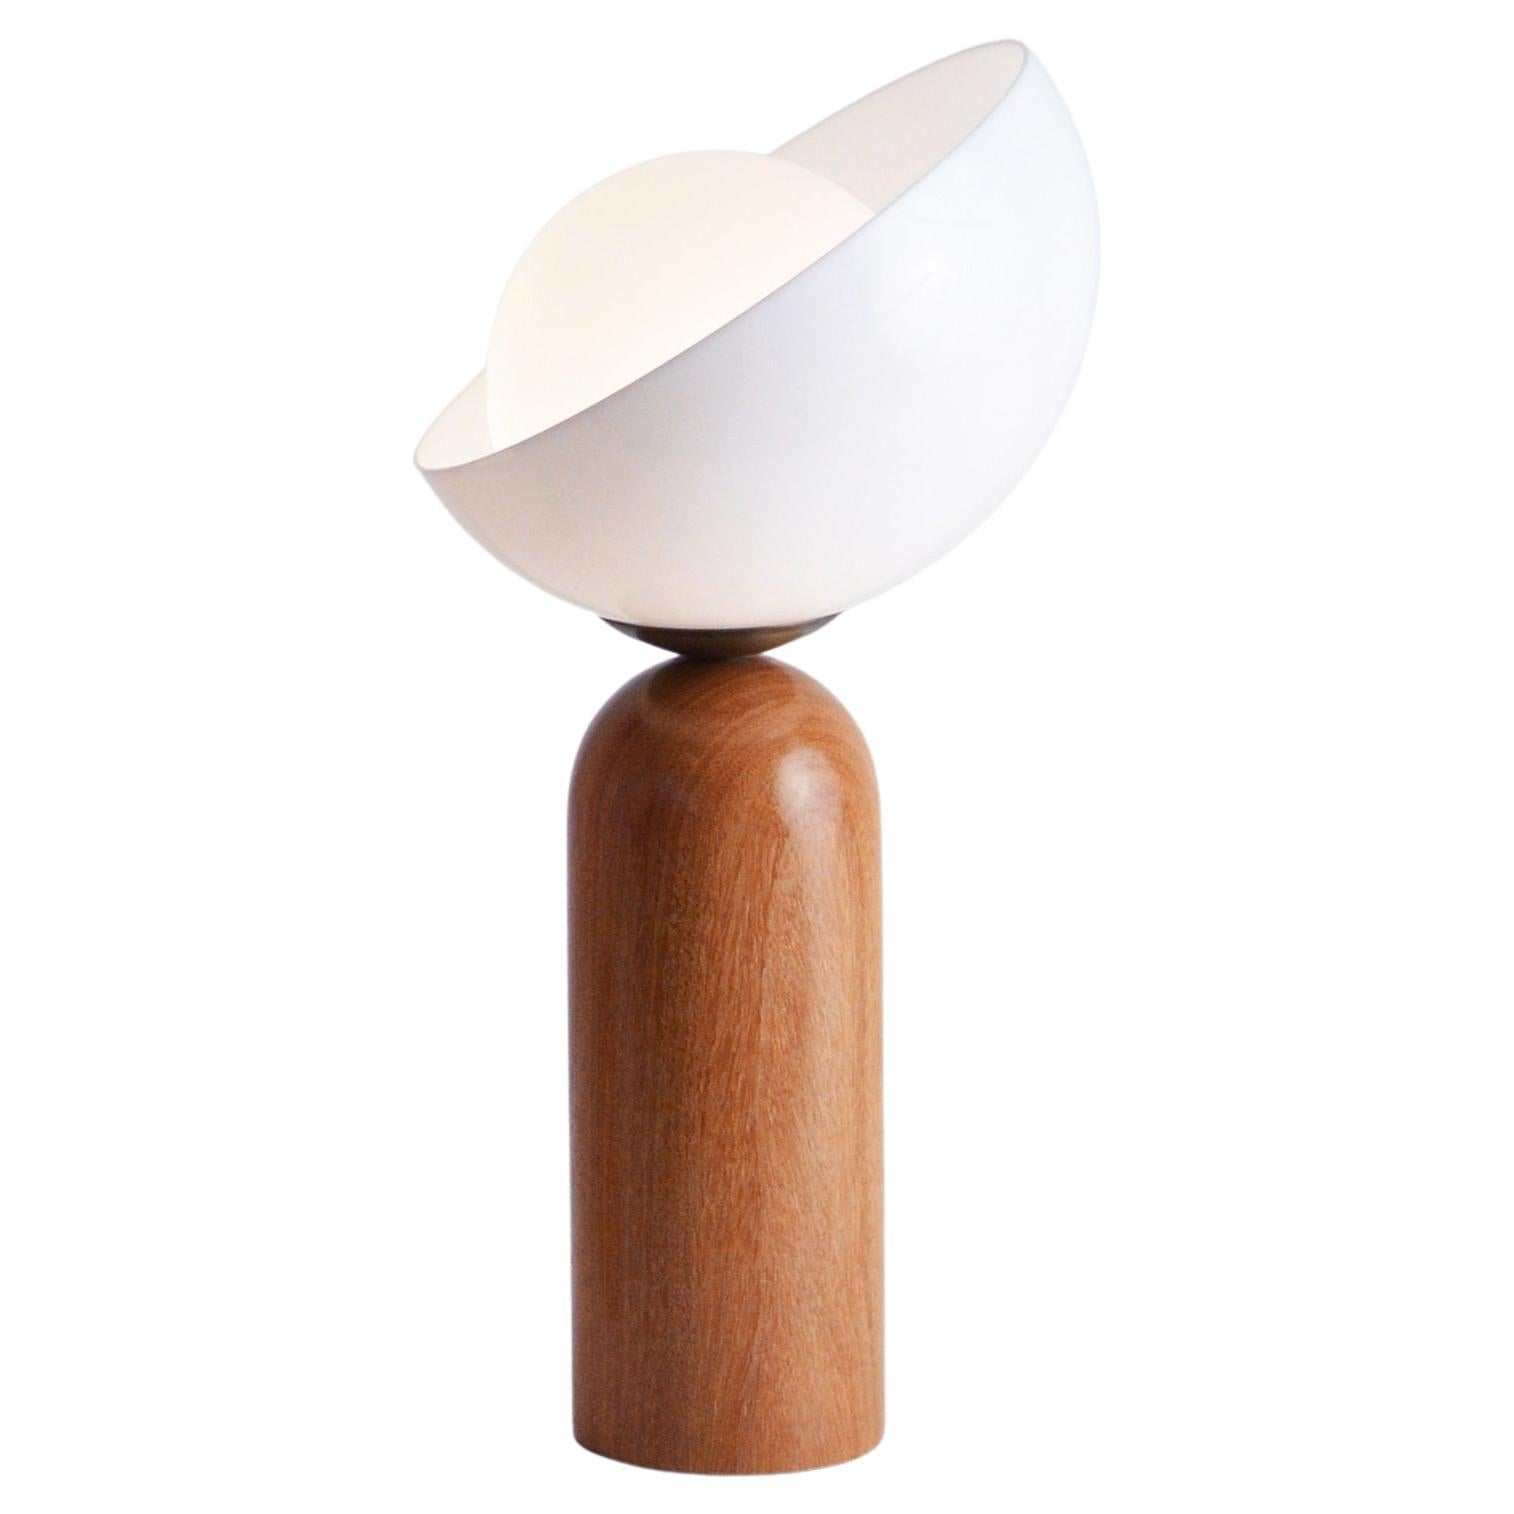 Brazilian contemporary acrylic and wood table lamp - medium